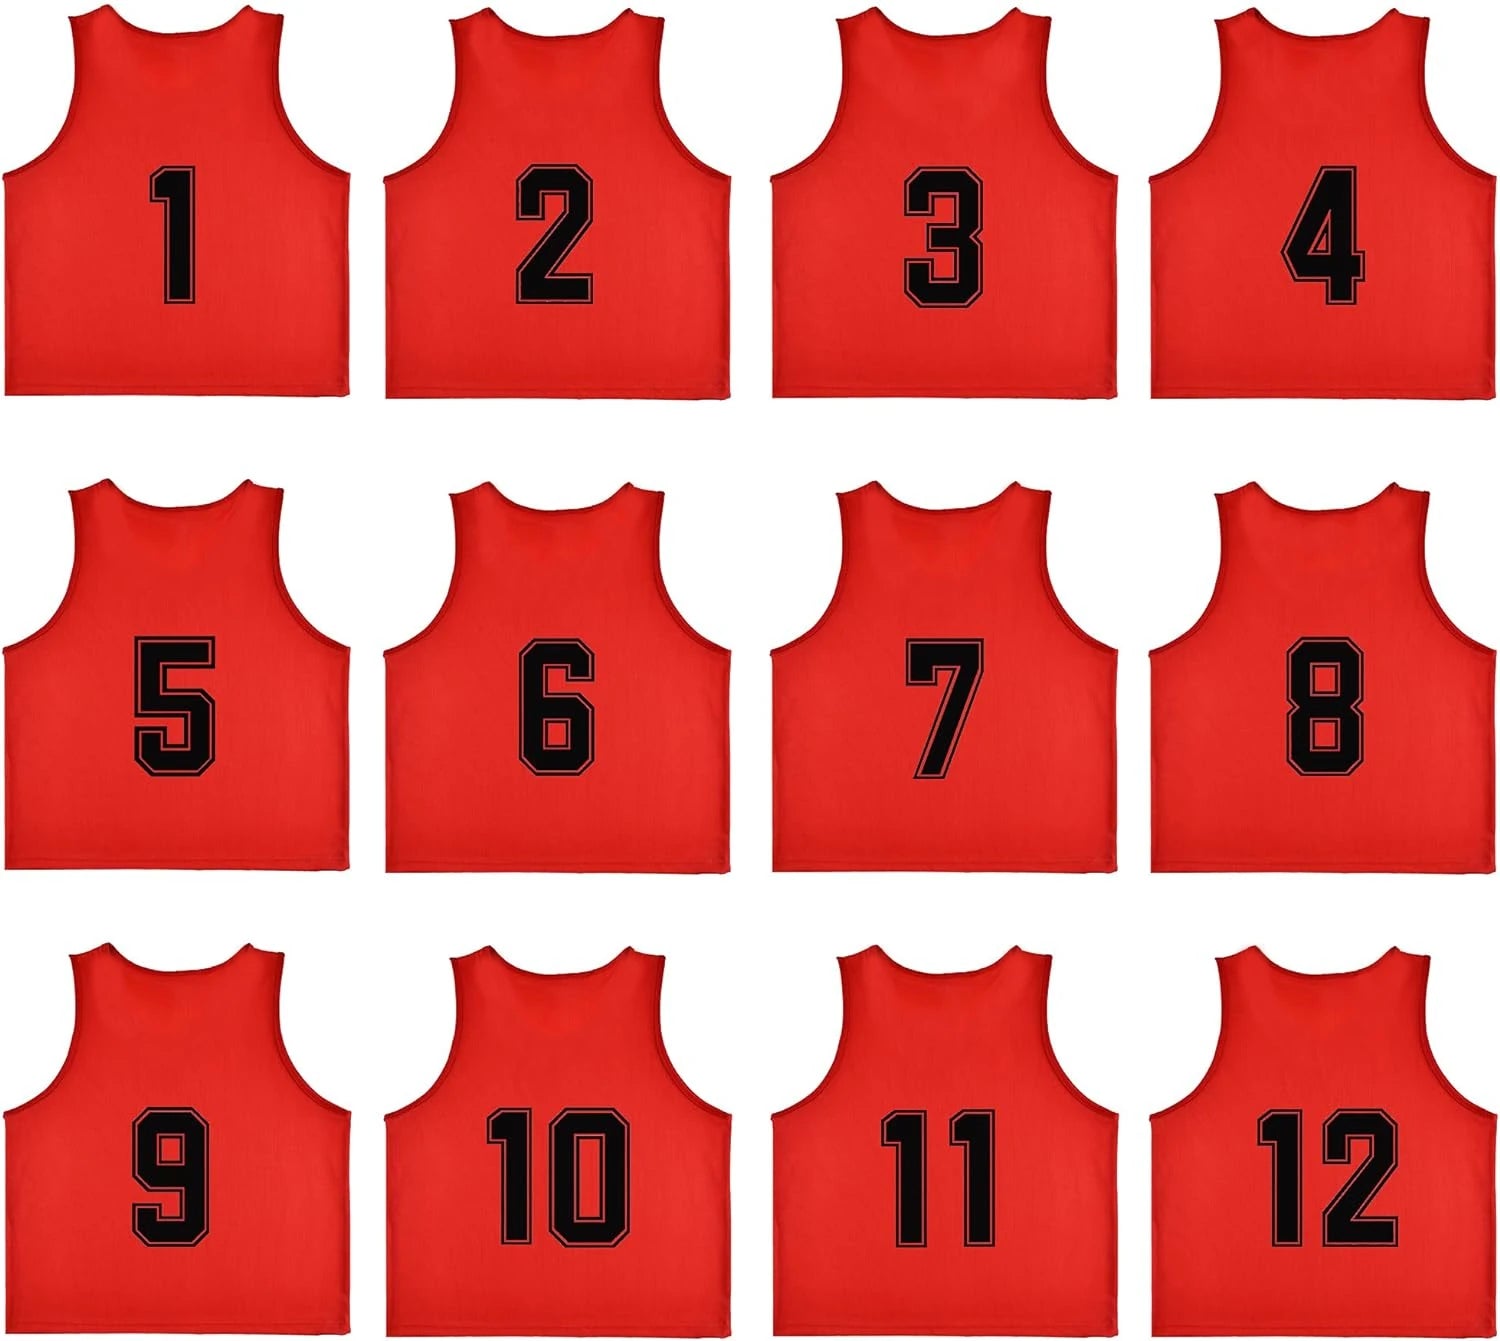 Buy red Team Practice Scrimmage Vests Sport Pinnies Training Bibs Numbered (1-12)